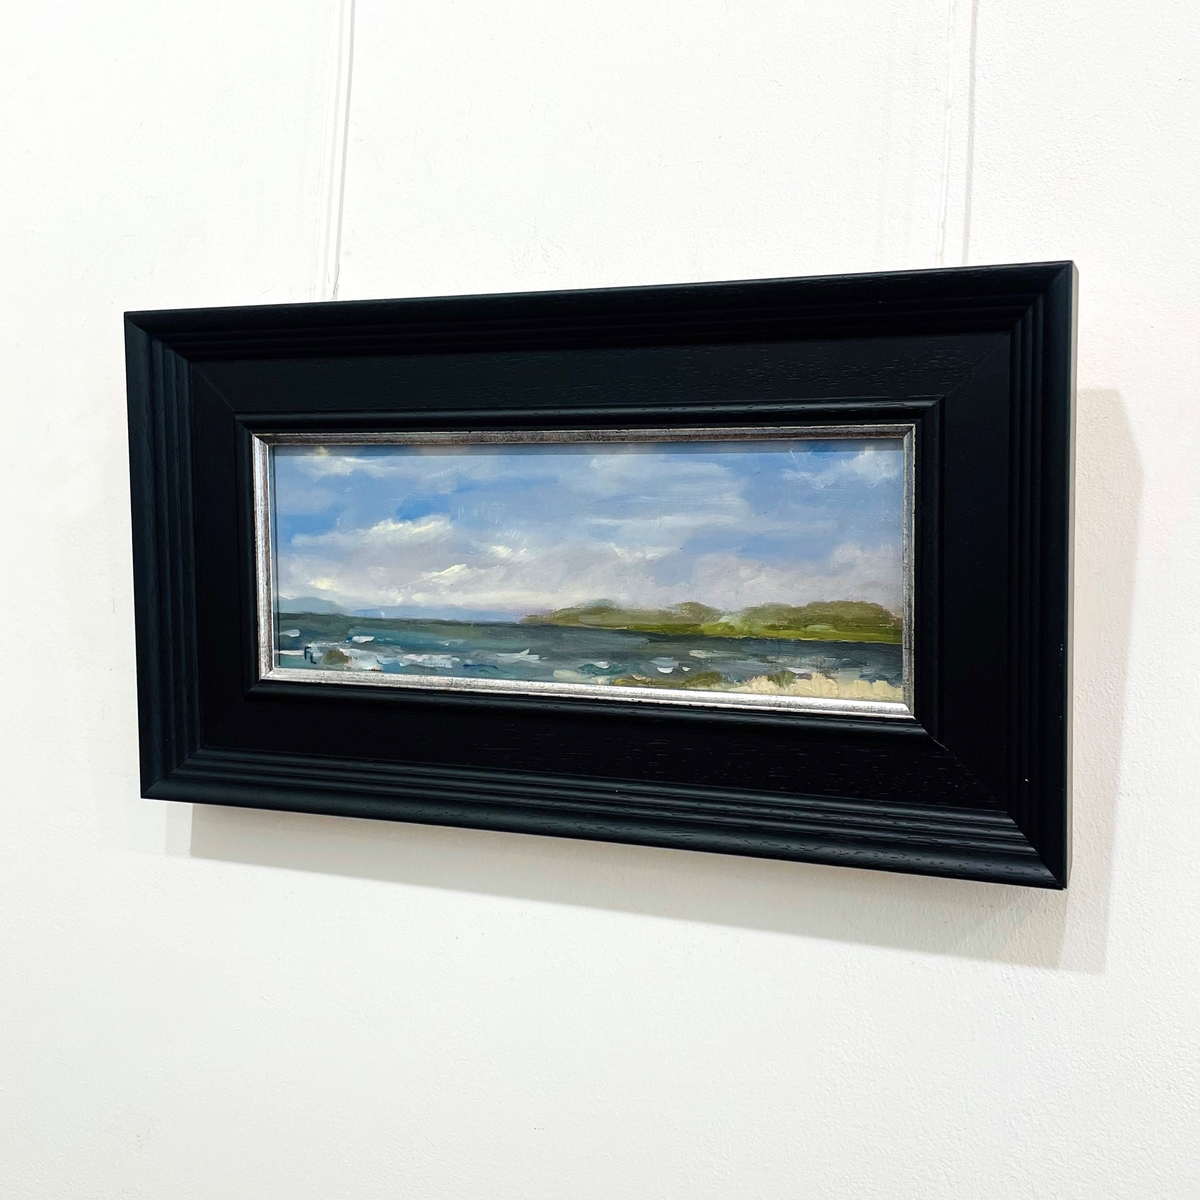 'An Arran View' by artist Fiona Longley